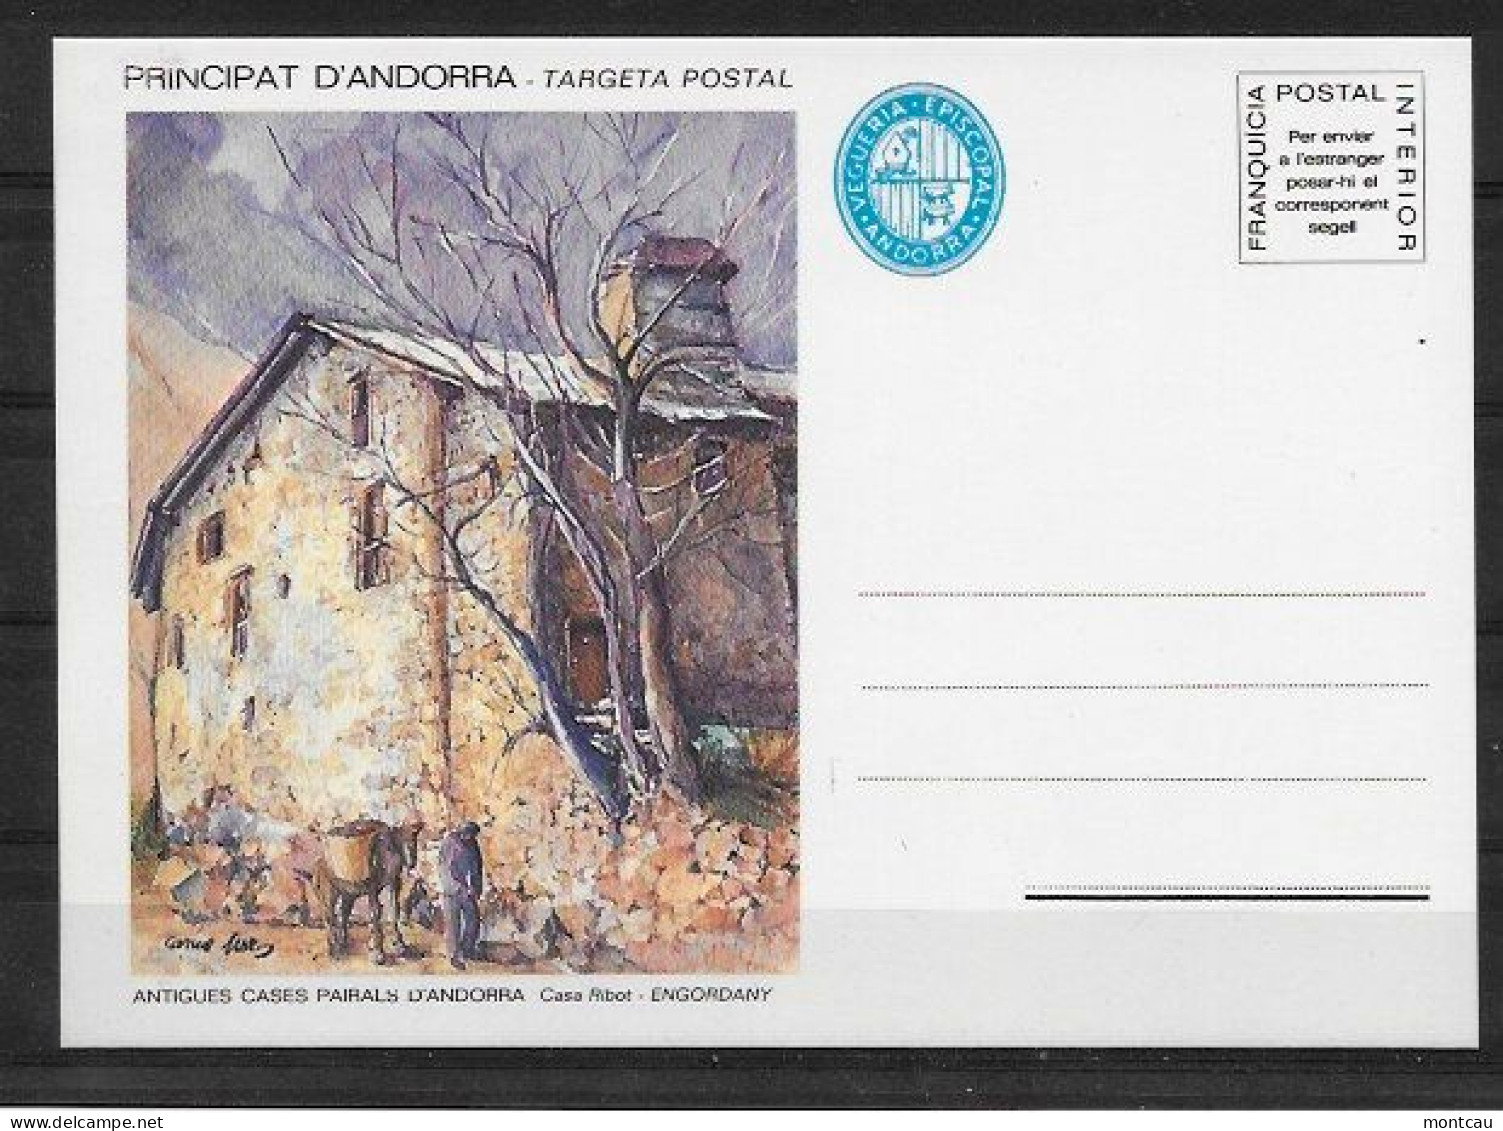 Andorra - Franquicia Postal -Engordany - Episcopale Vignetten